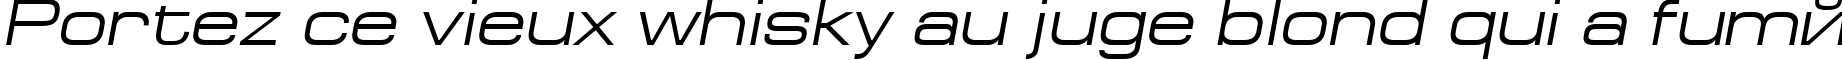 Пример написания шрифтом Europe_Ext Oblique текста на французском